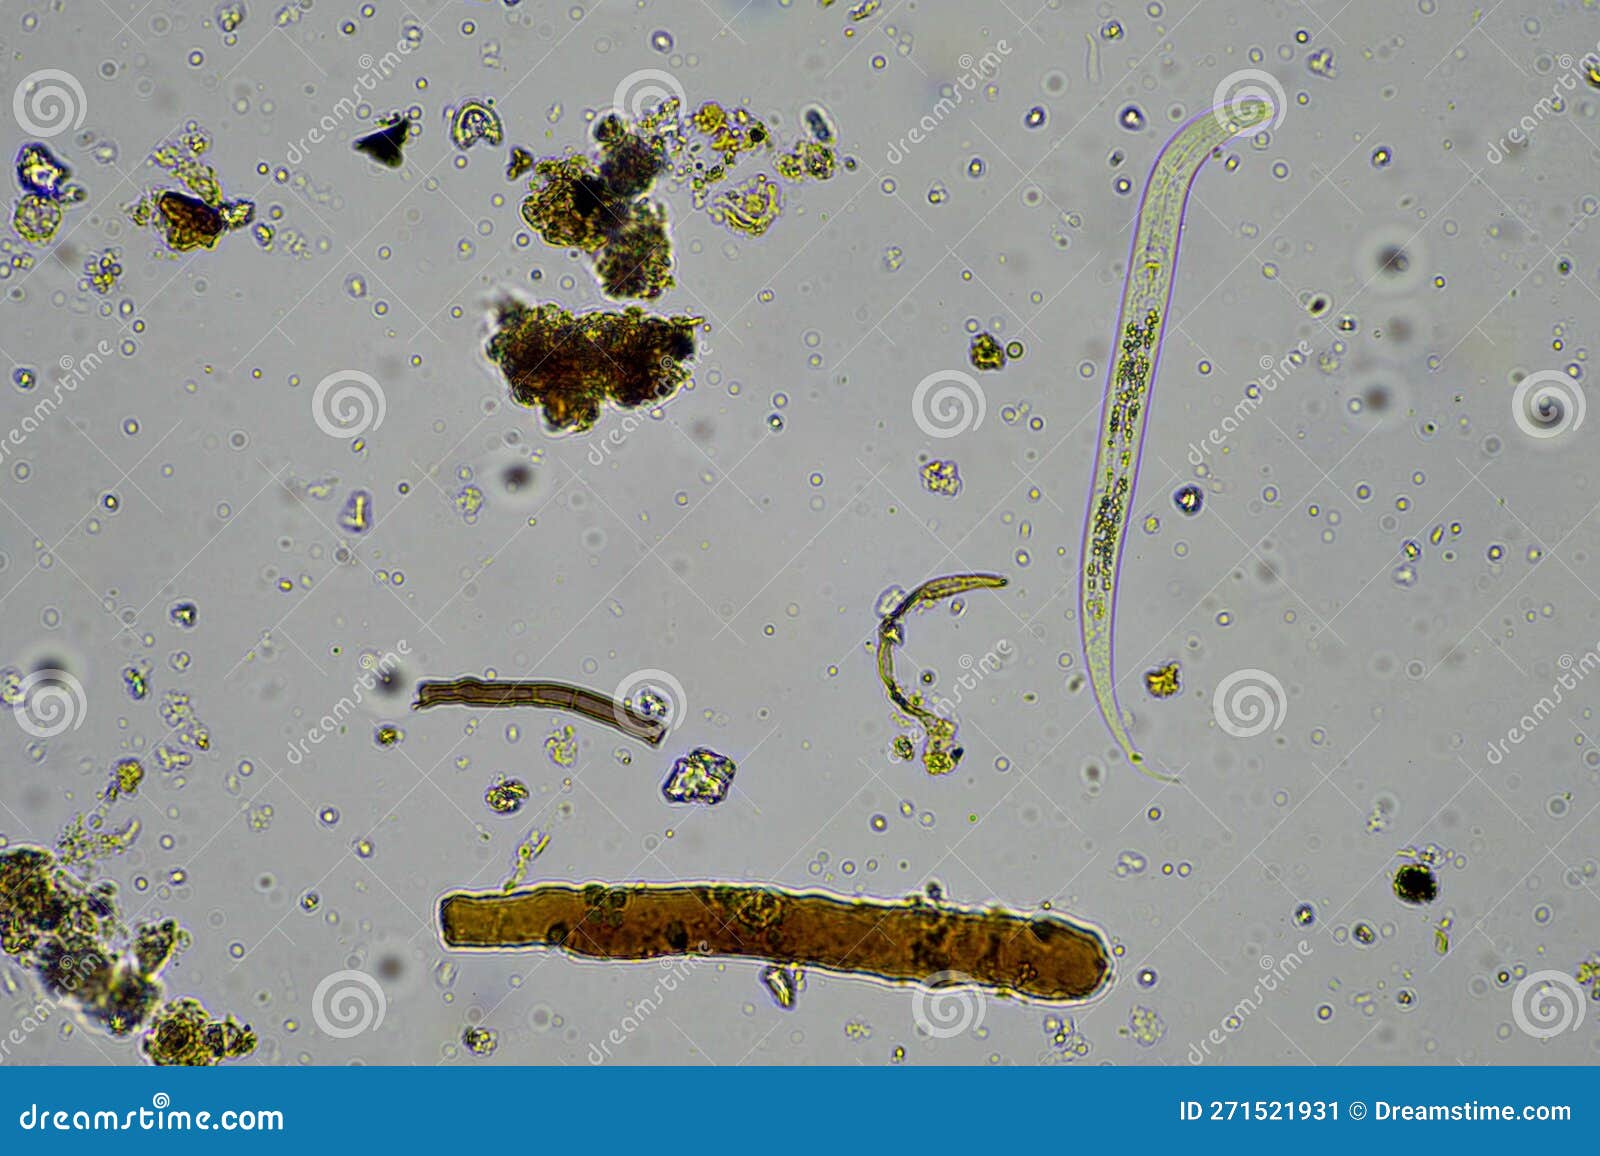 microorganisms in pond water under microscope